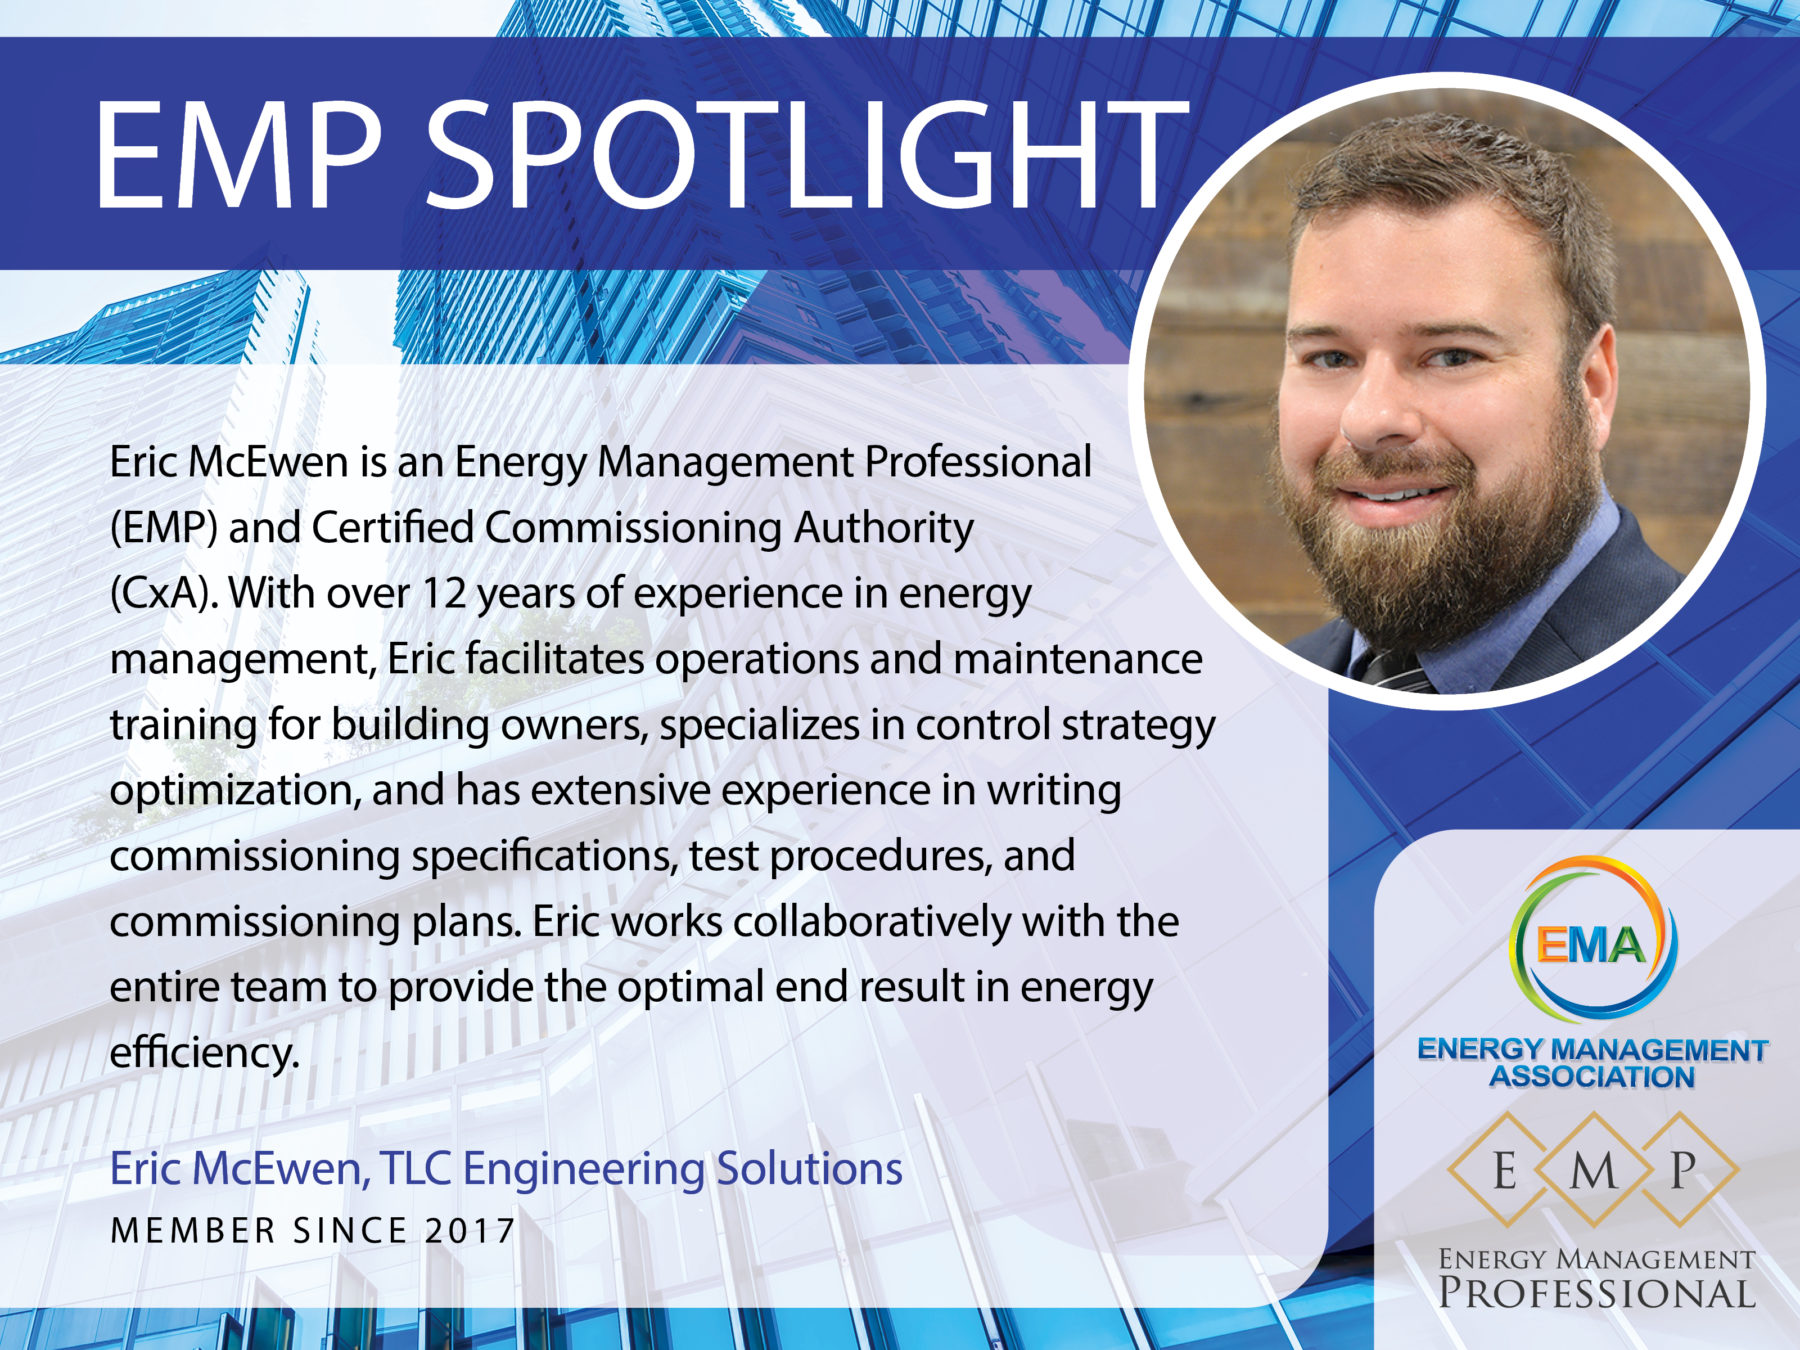 EMP Spotlight Eric McEwen TLC Engineering Solutions